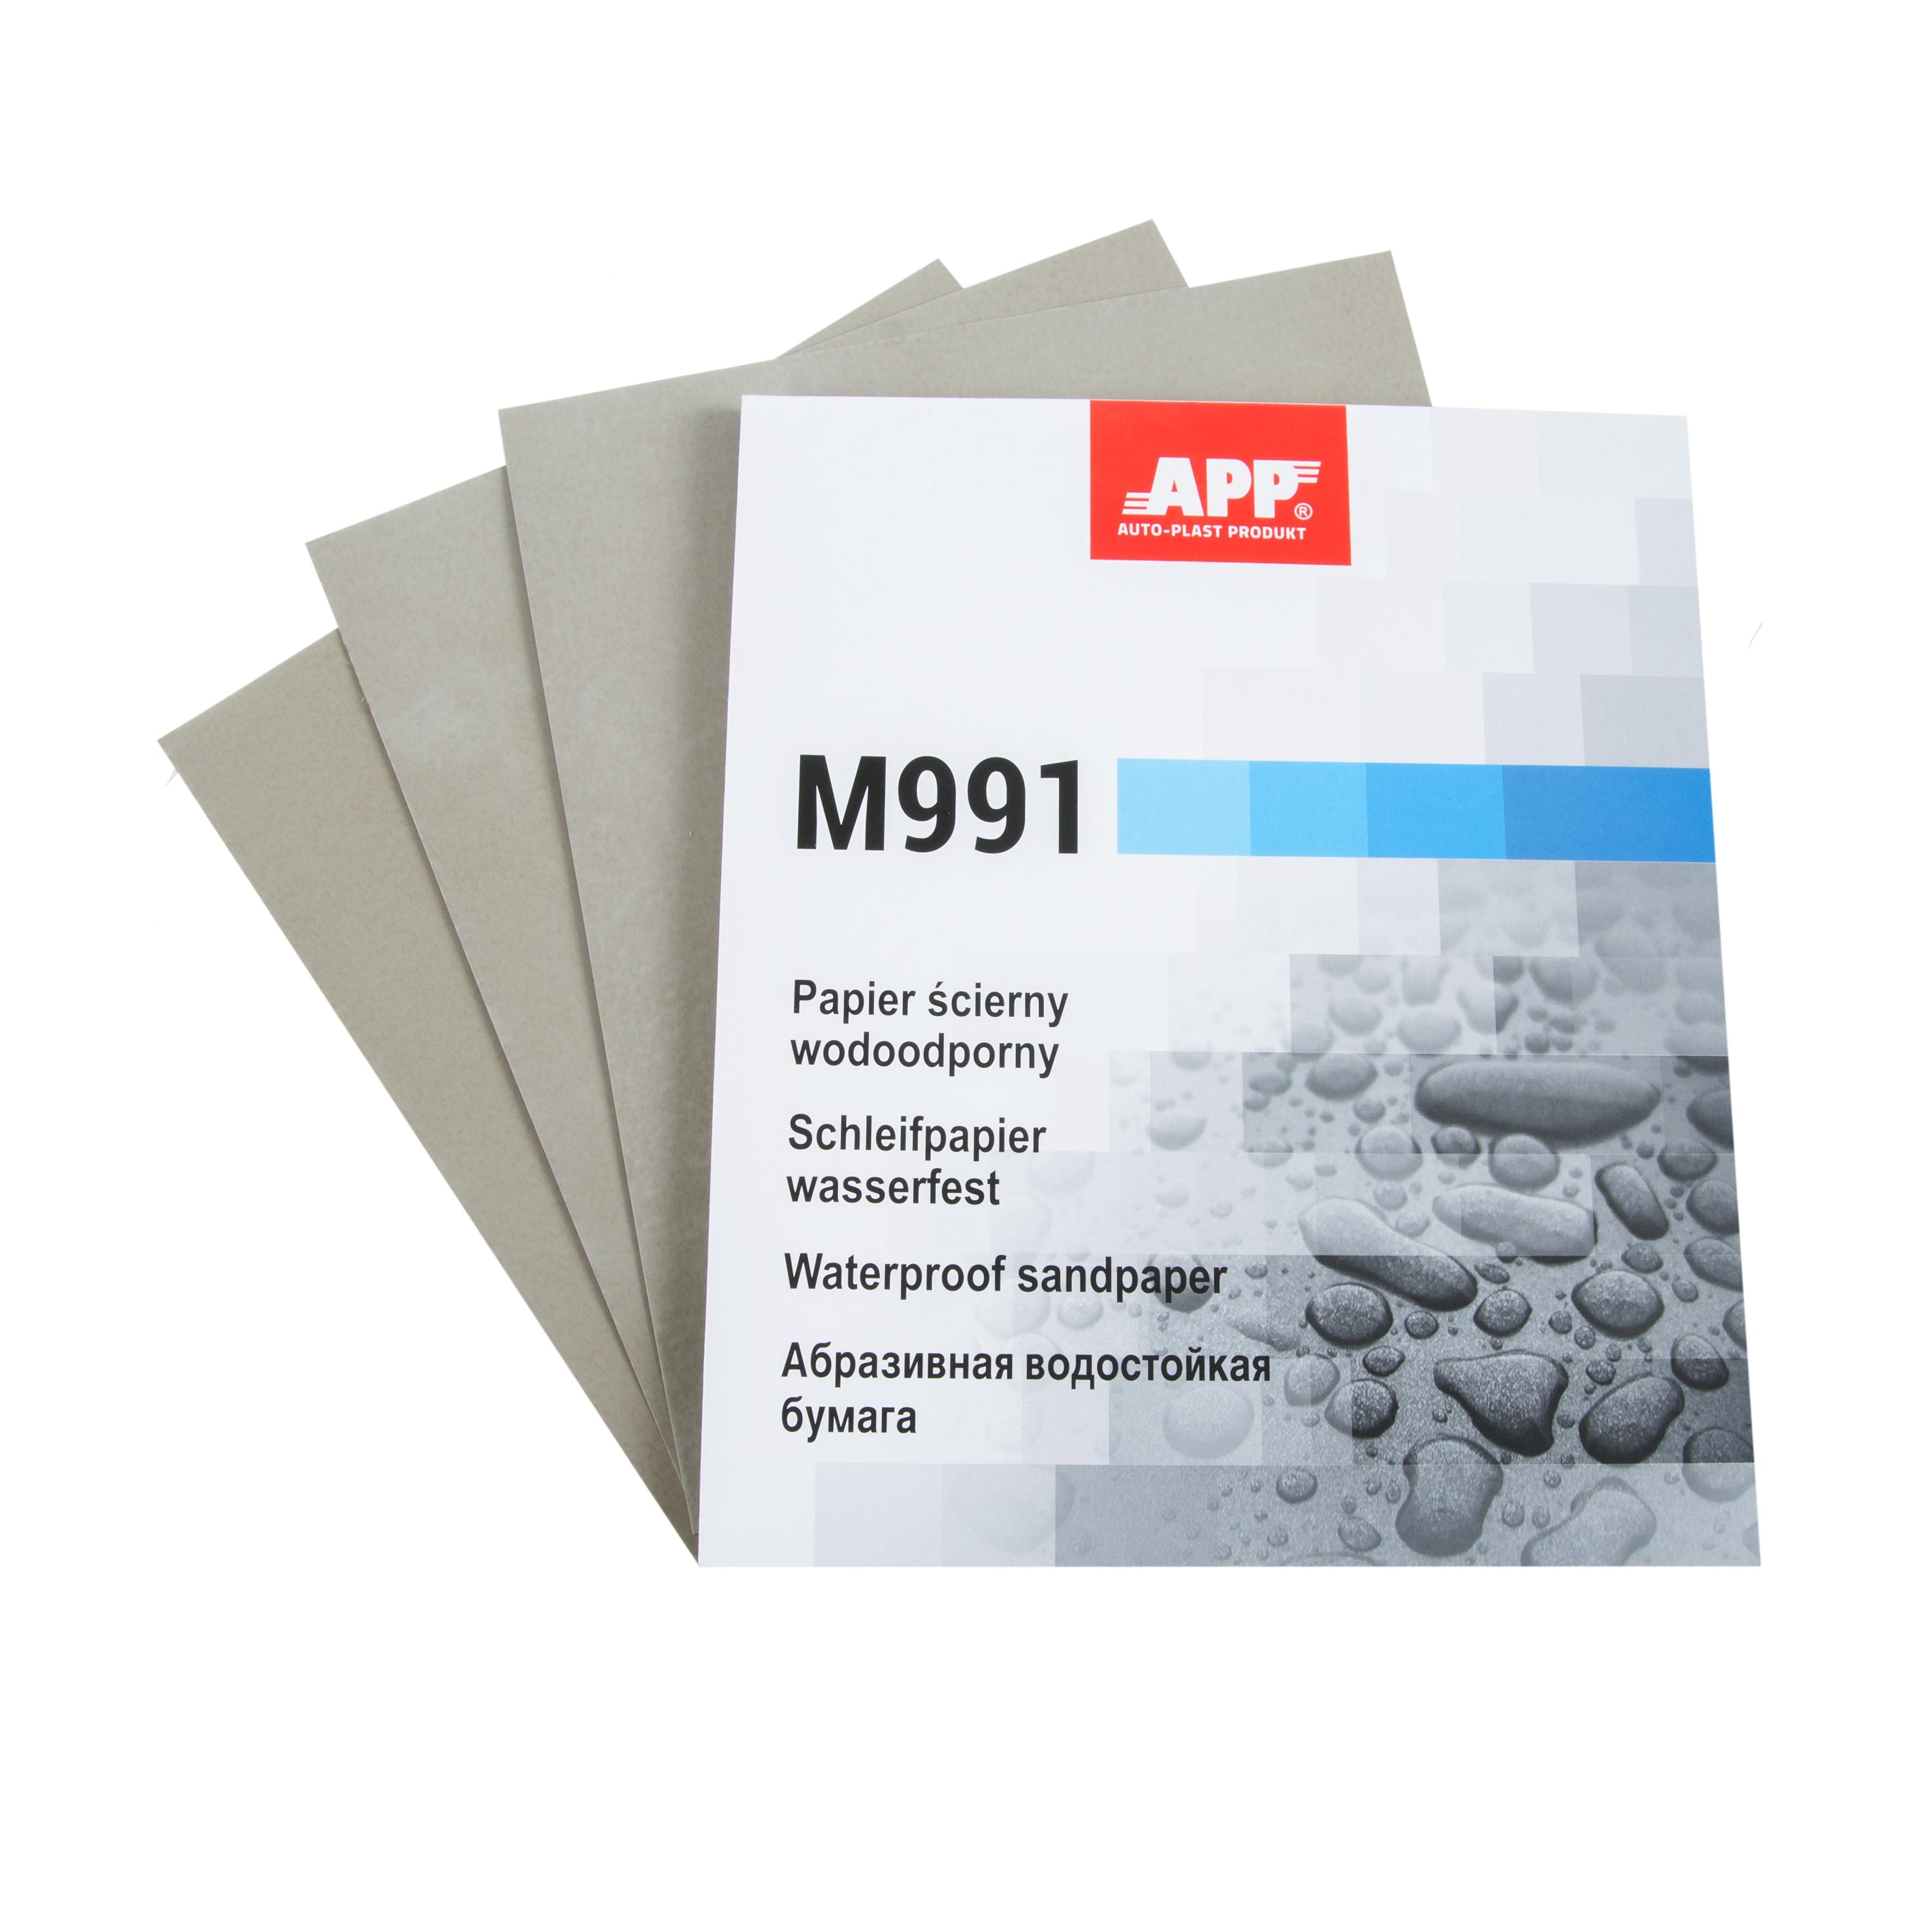 APP 40MW0800 Schleifpapier M991 wasserfest P800 blau 230 mm x 280 mm 50 Stück | Wasserschleifpapier WP waterproof Blätter Sheets